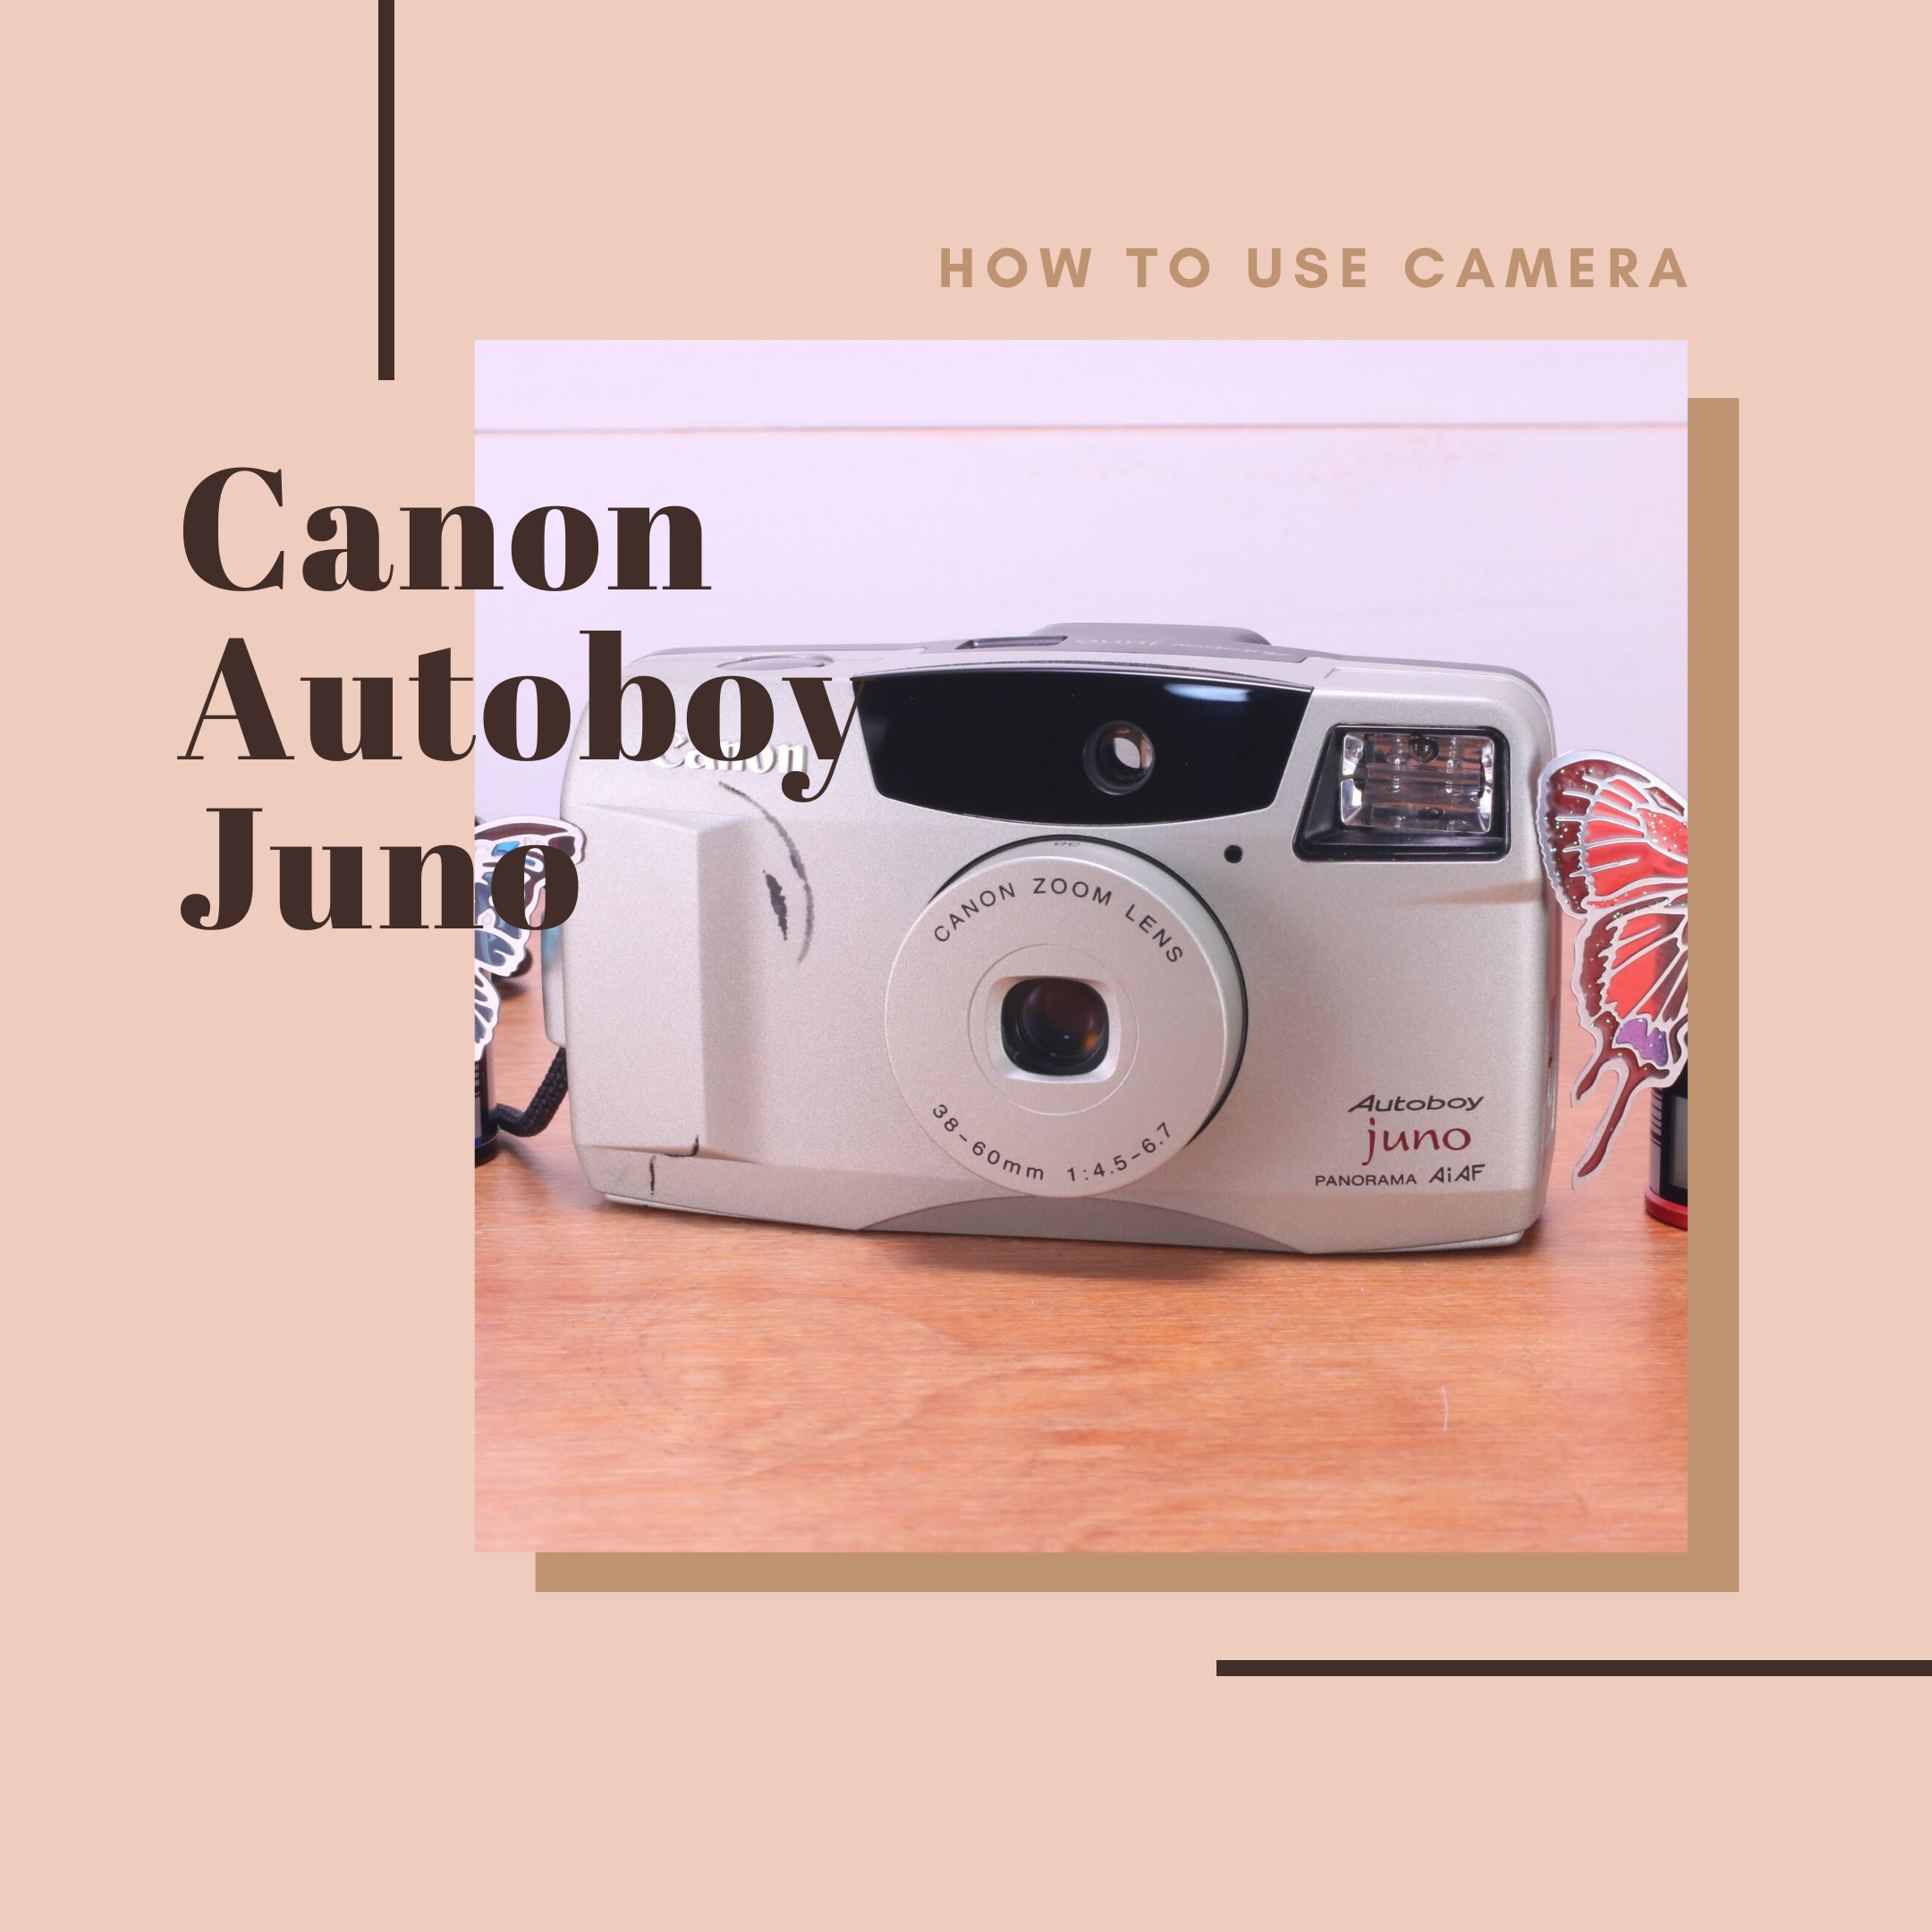 canon autoboy juno フィルカメラ